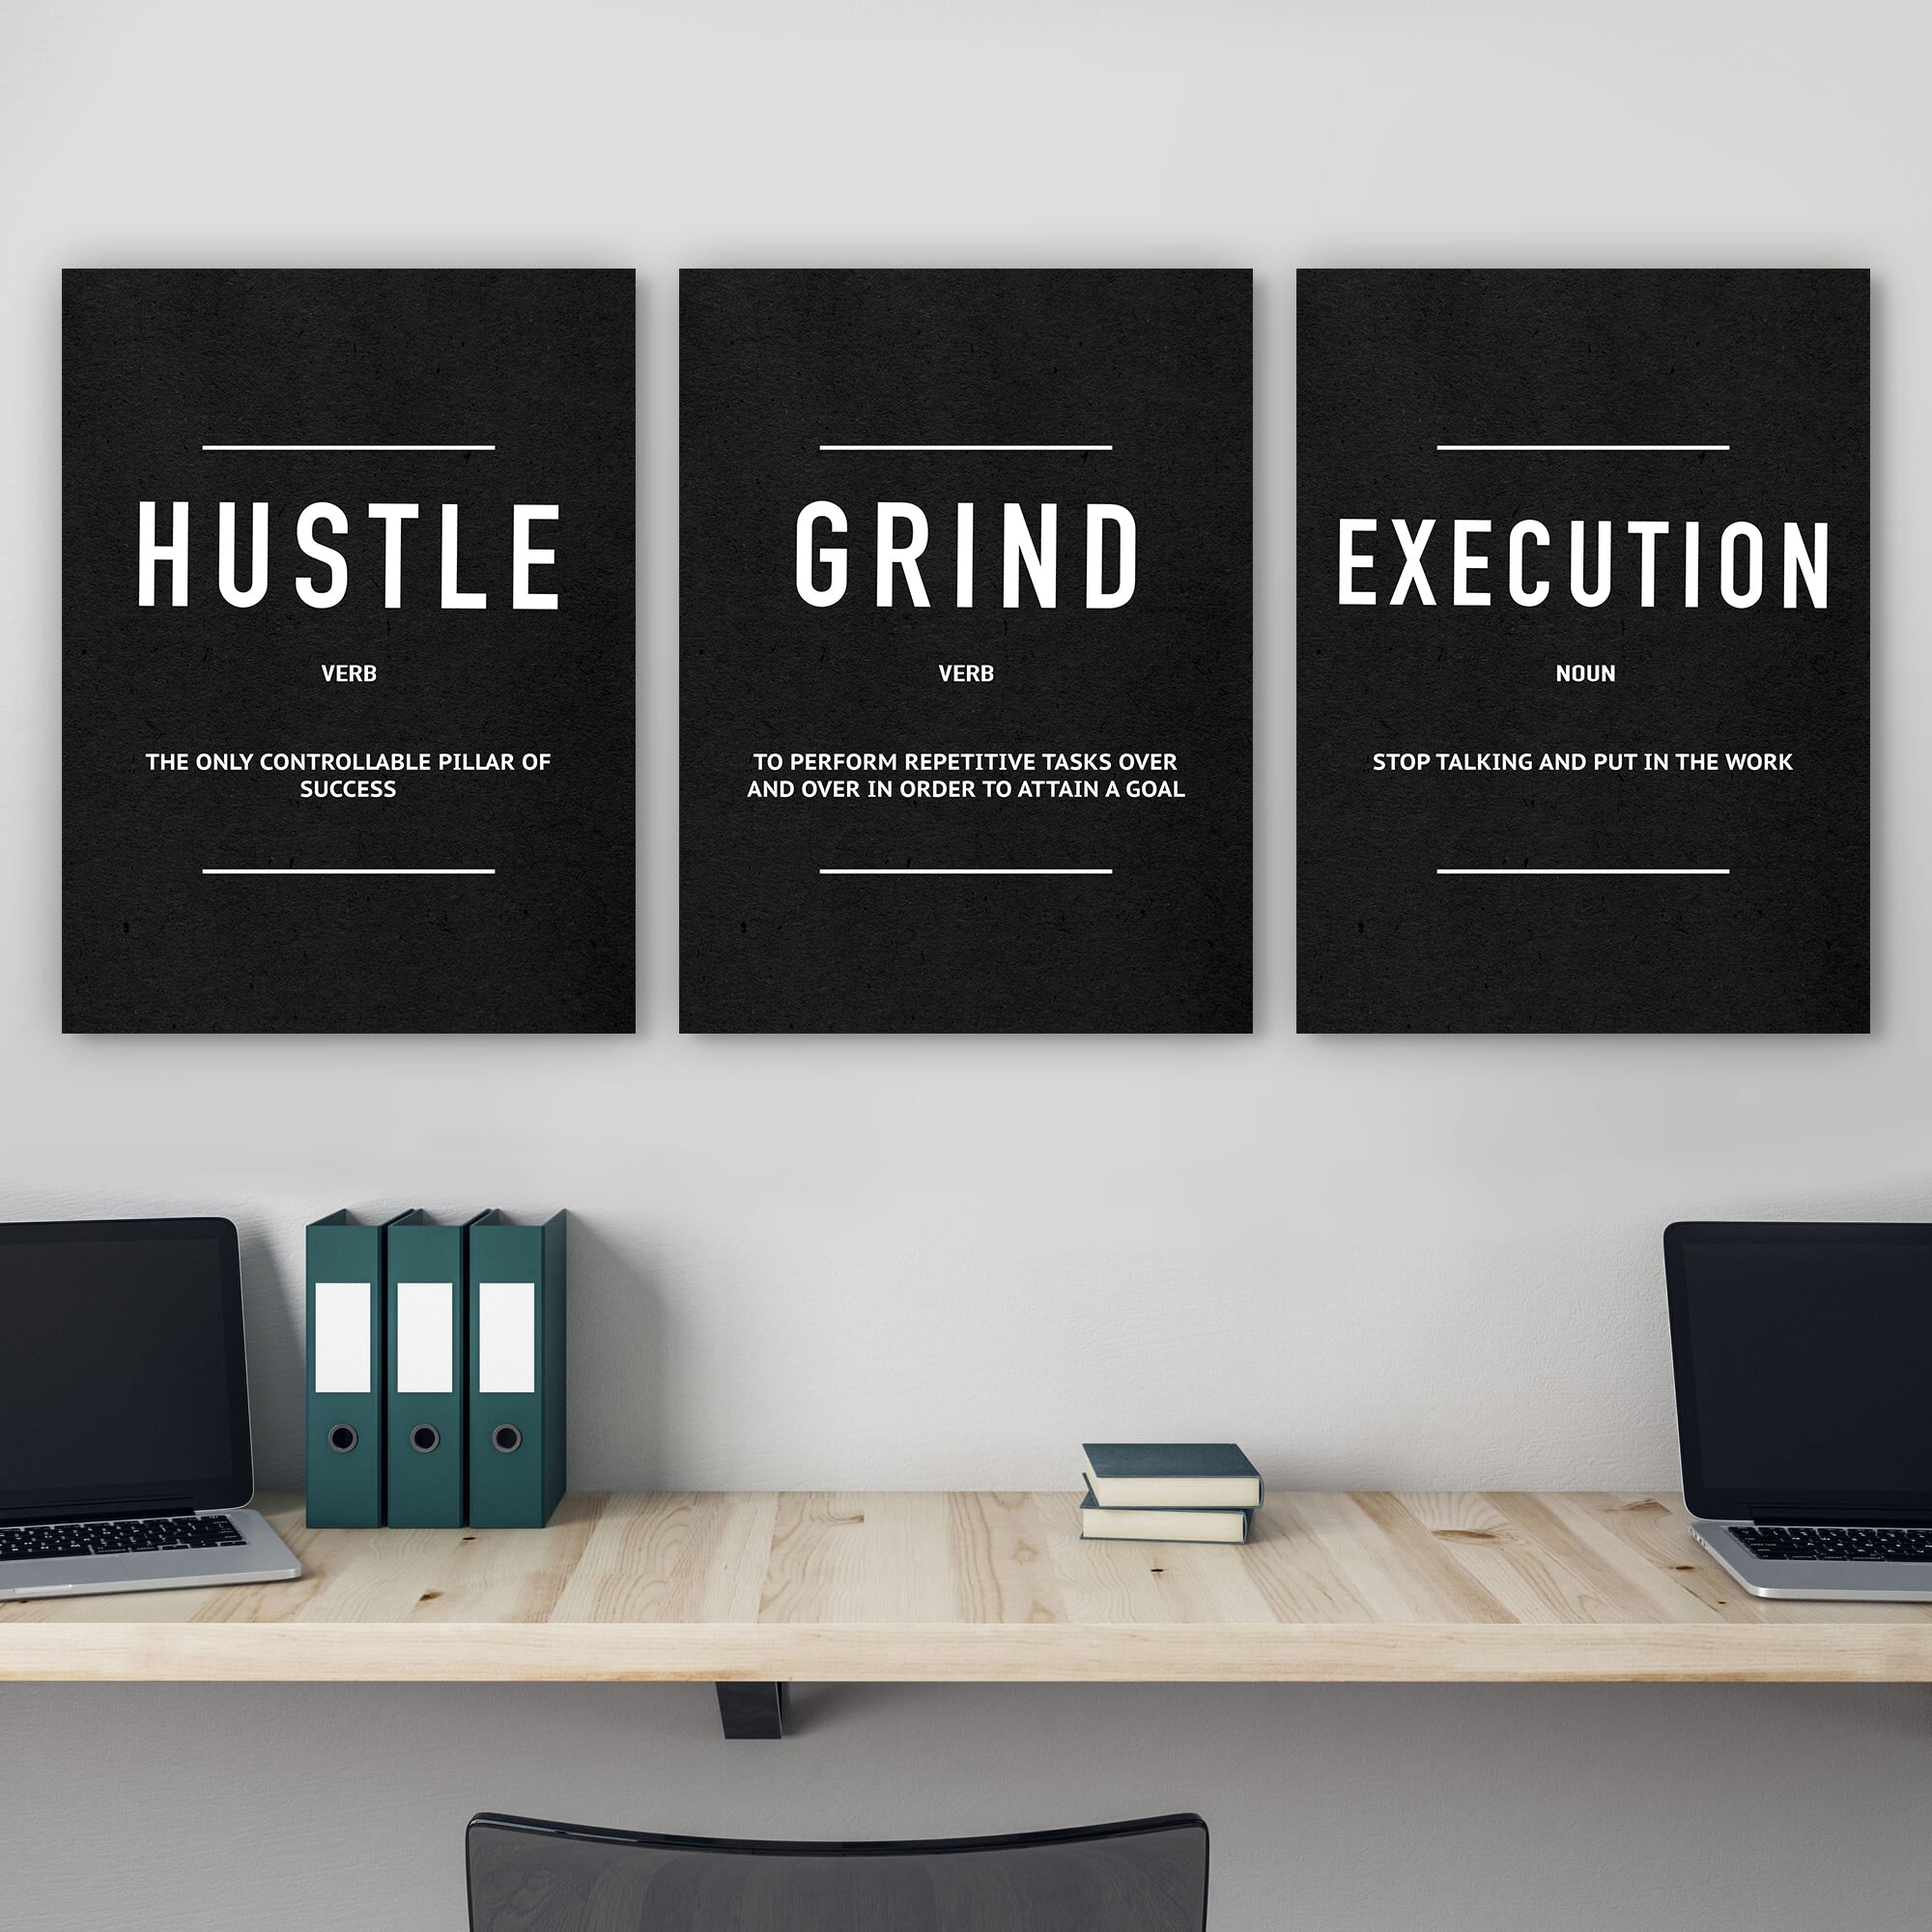 Hustle Verb Grind Verb Execution Noun 3X Bundle